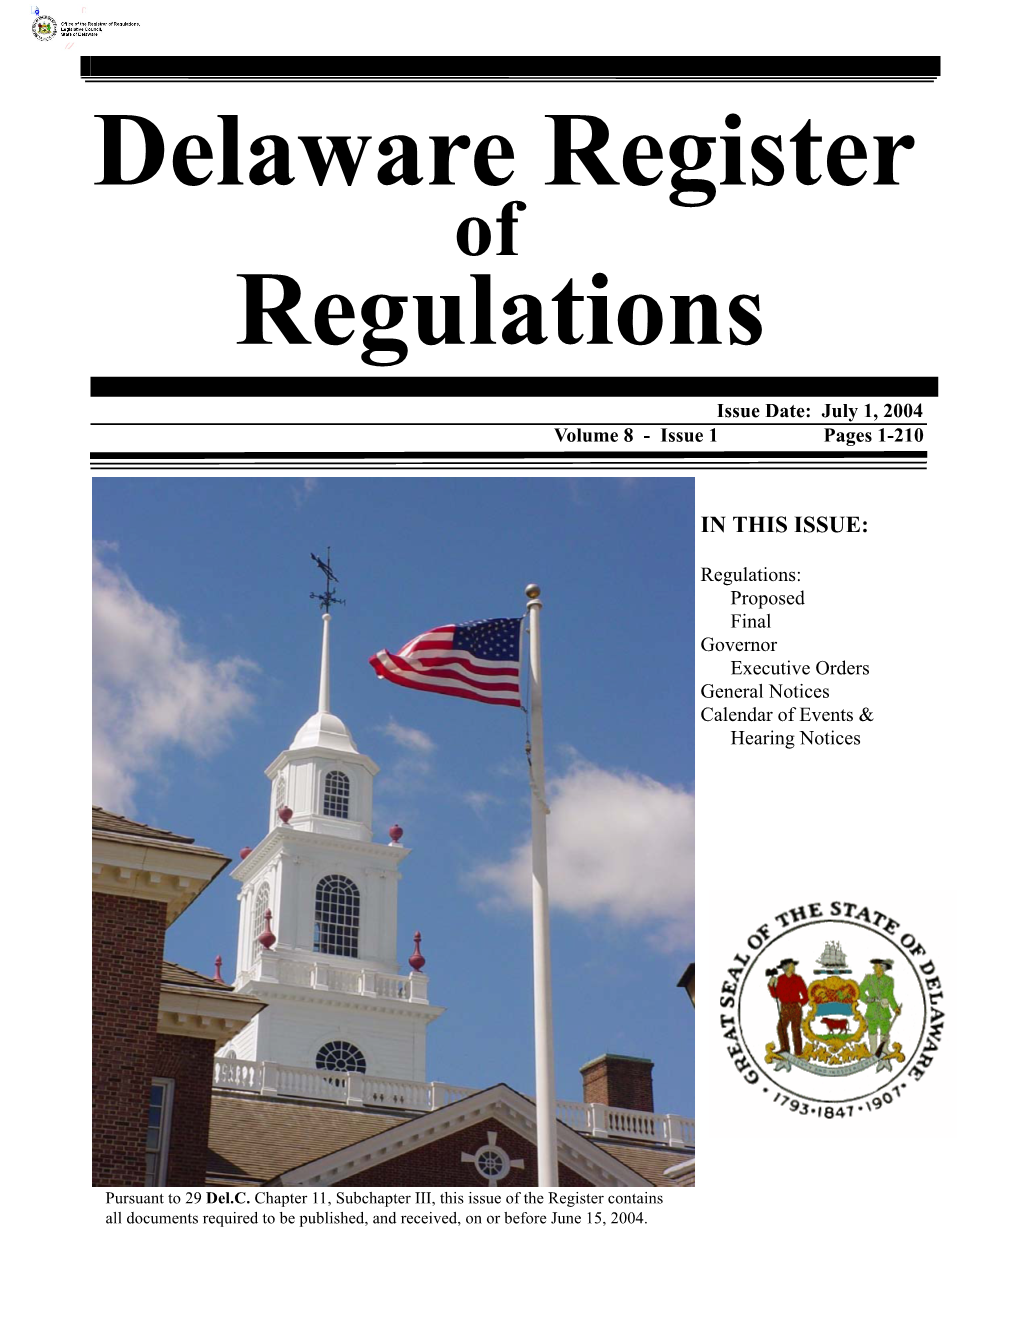 Delaware Register of Regulations, Volume 8, Issue 1, July 1, 2004